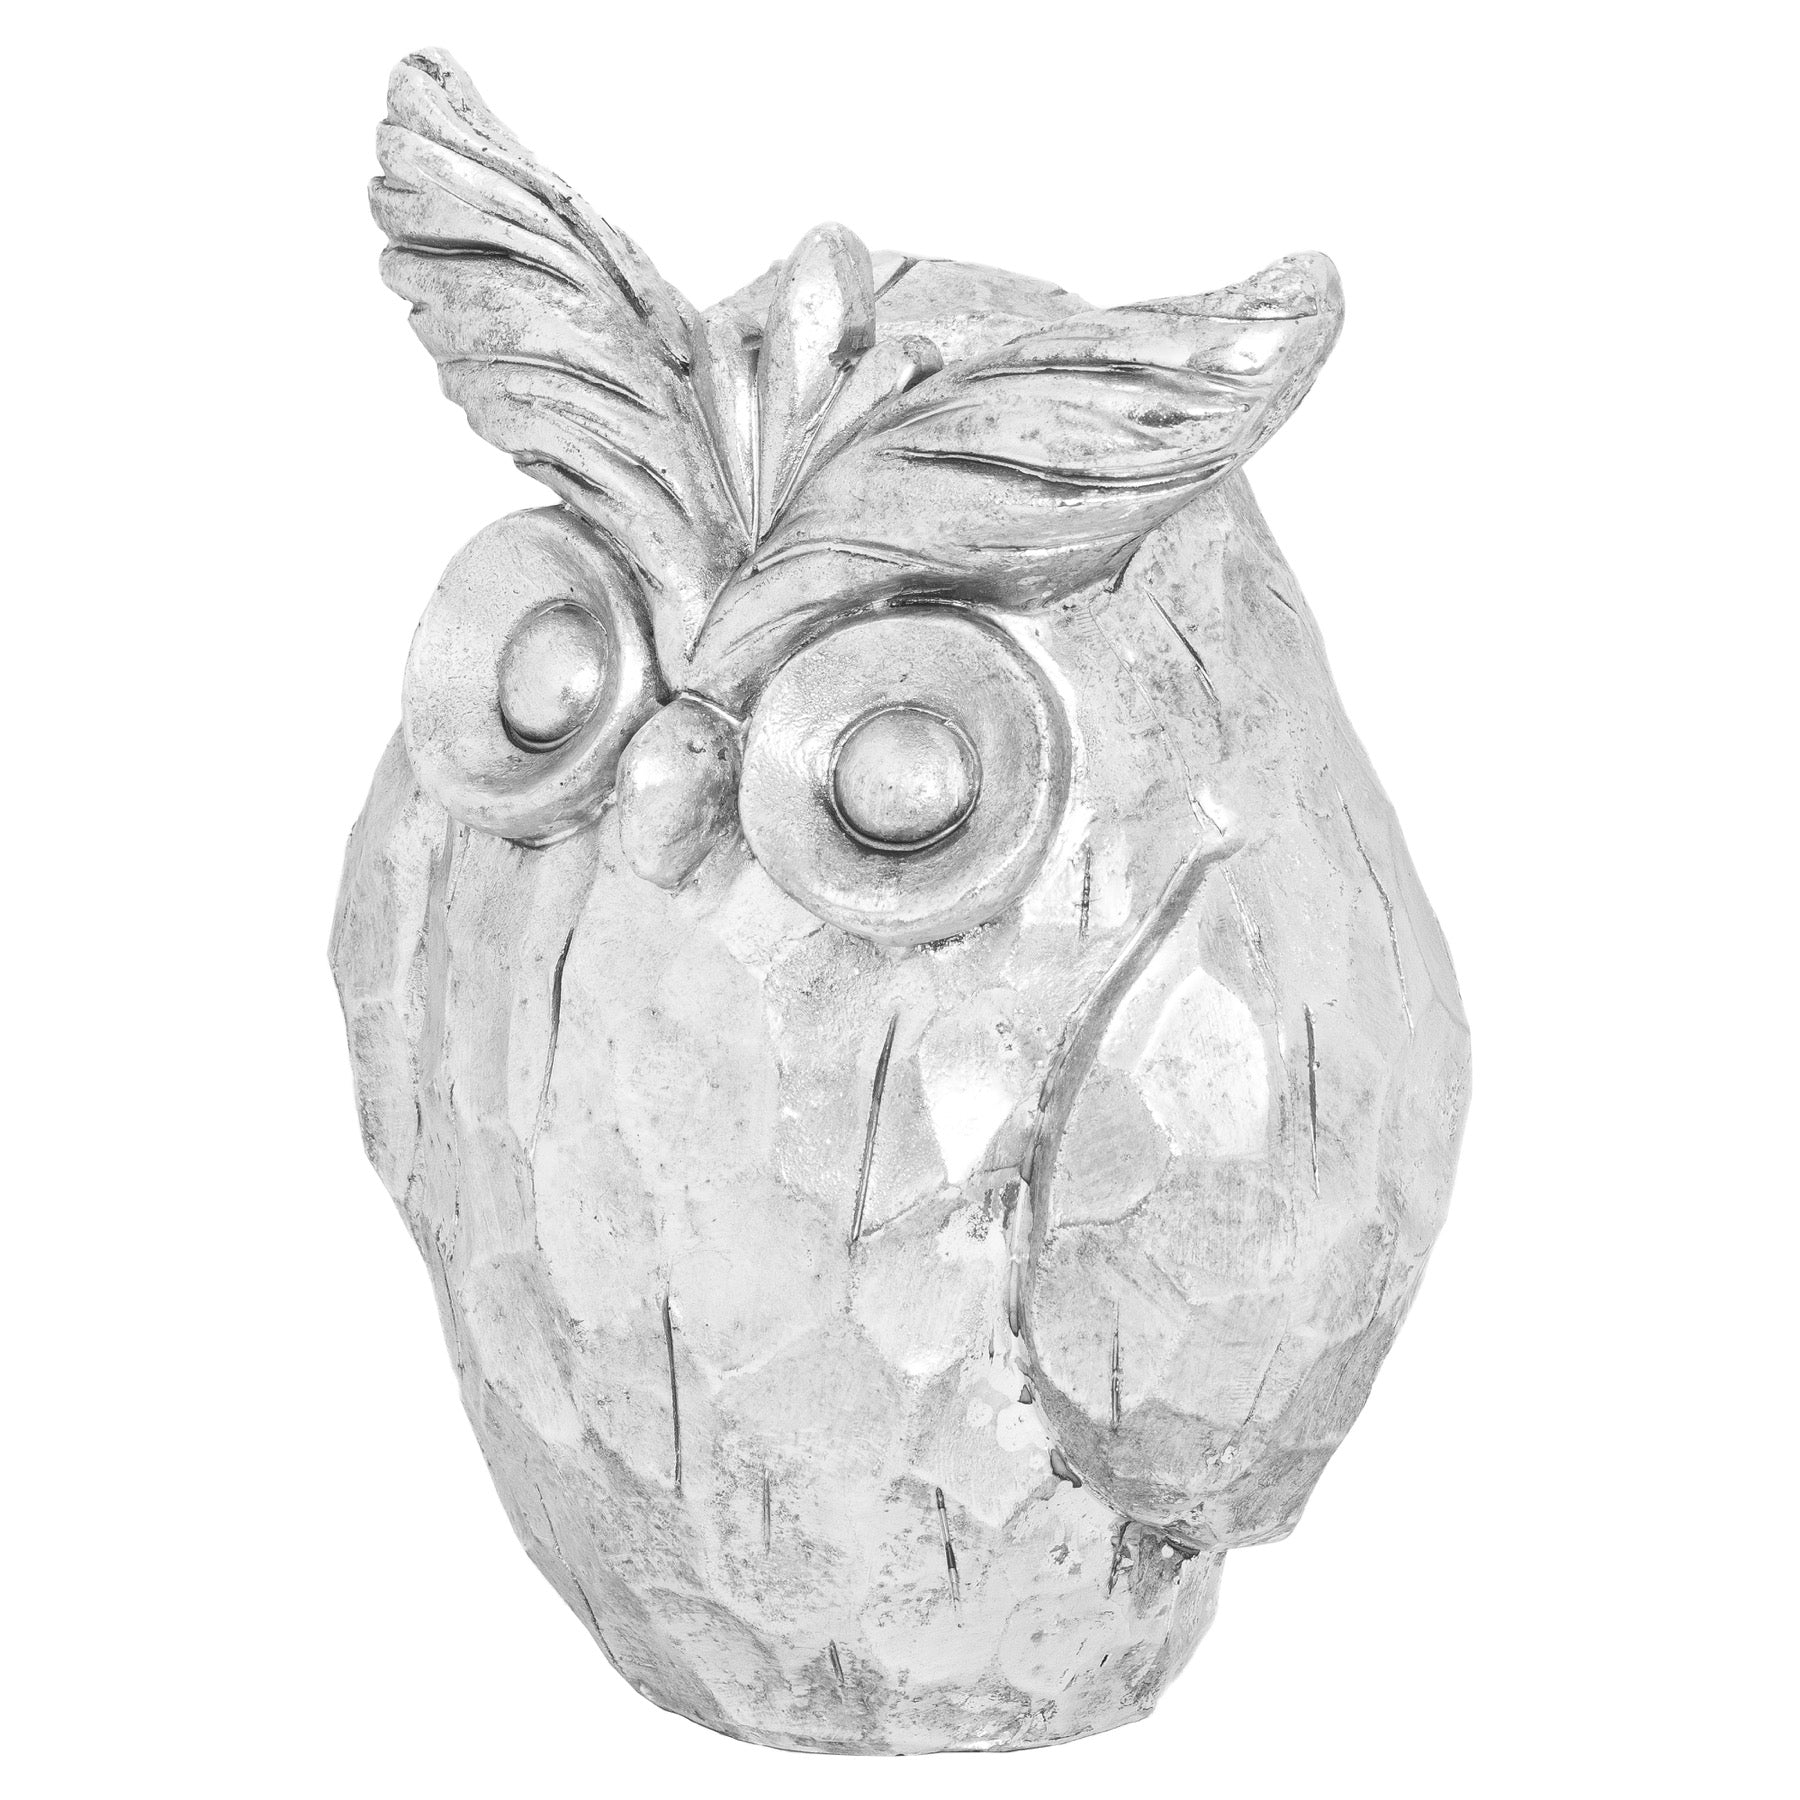 View Otis The Large Silver Ceramic Owl information